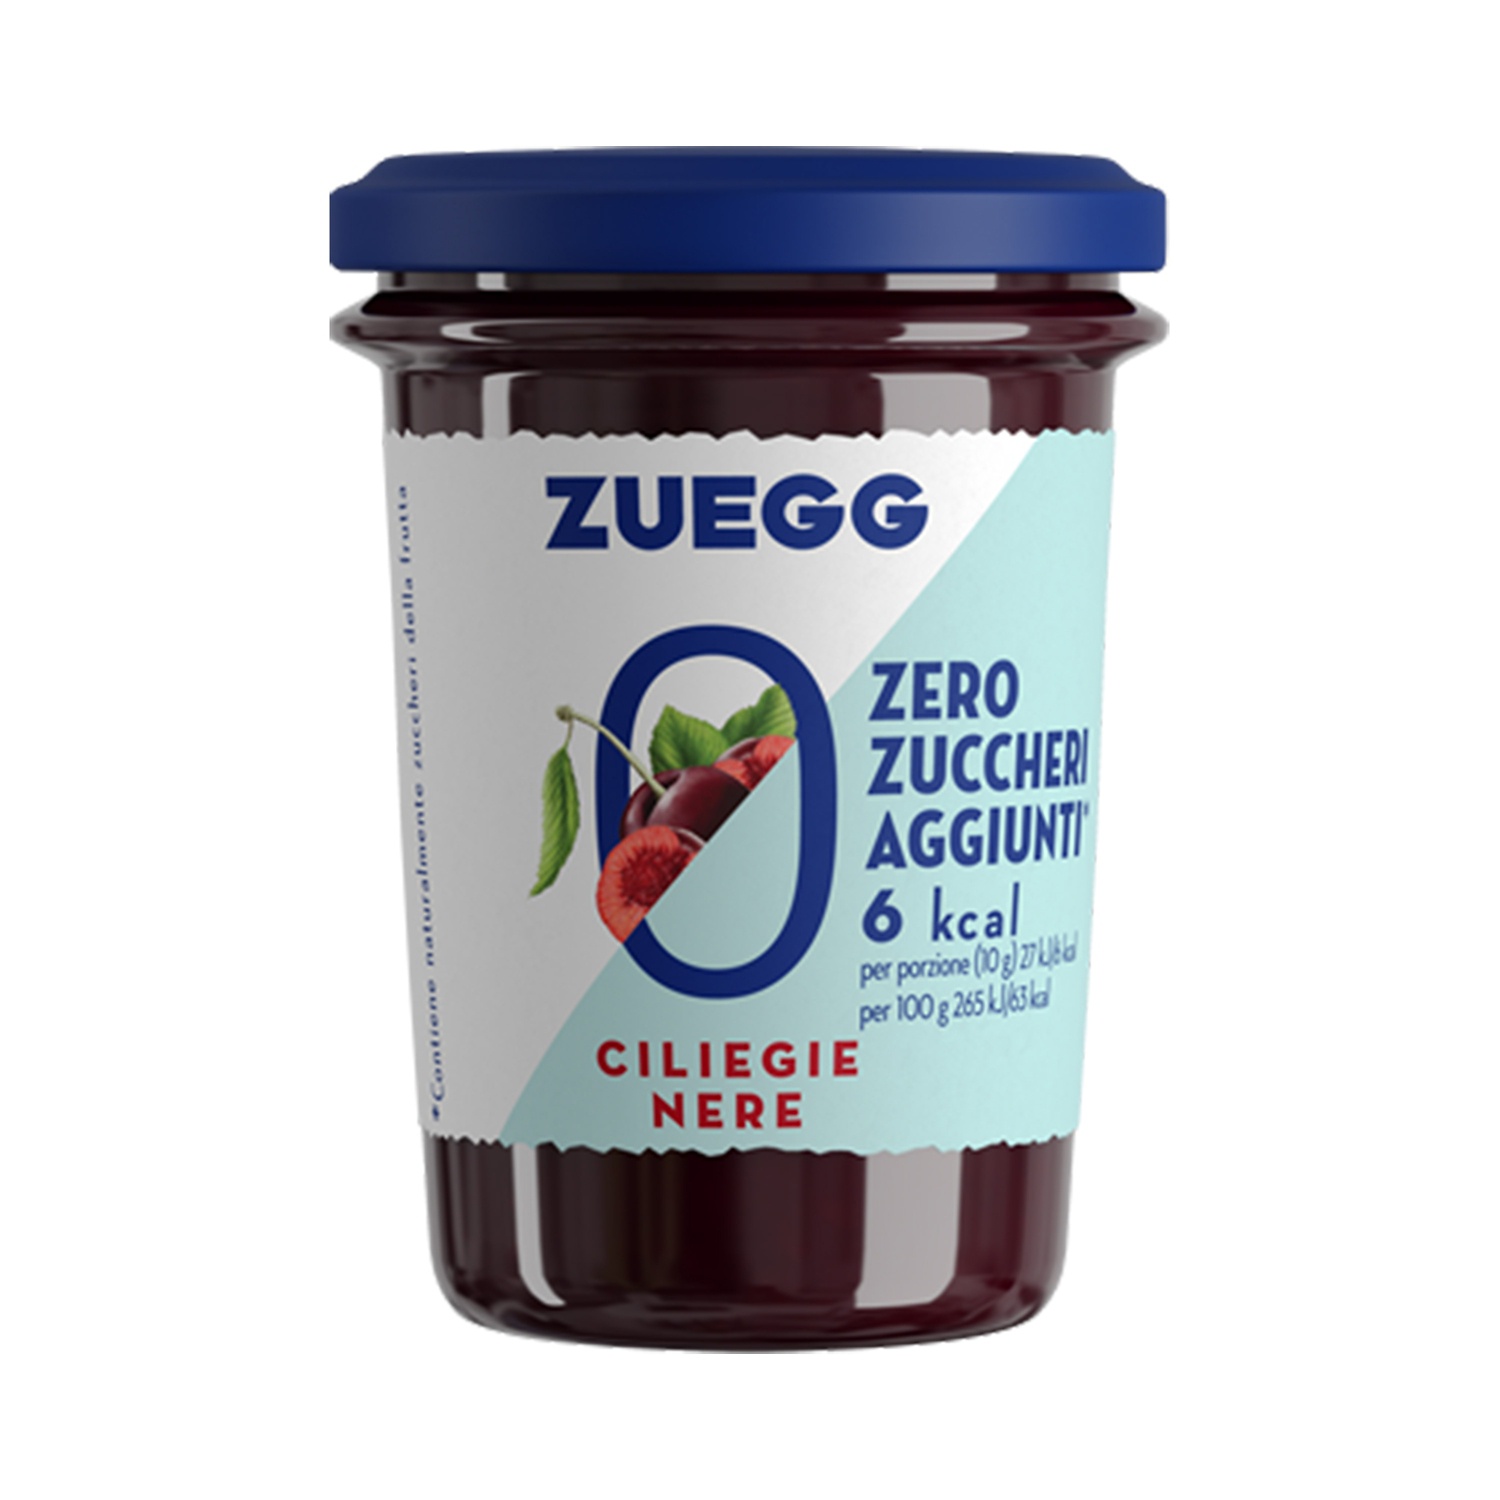 ZUEGG Zero Zuccheri aggiunti alle ciliegie nere